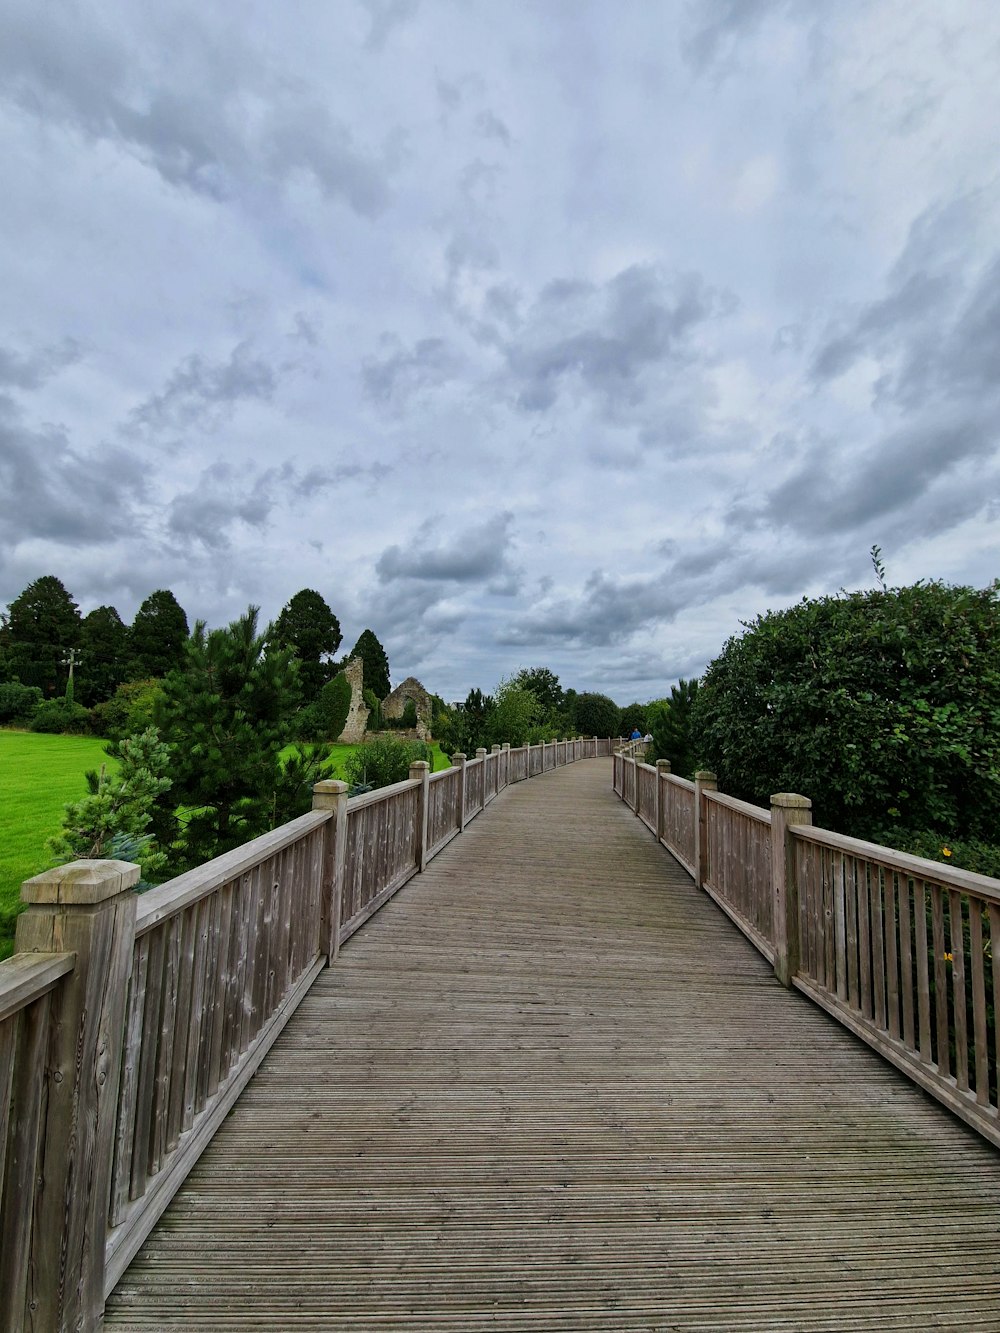 a wooden bridge over a grassy field